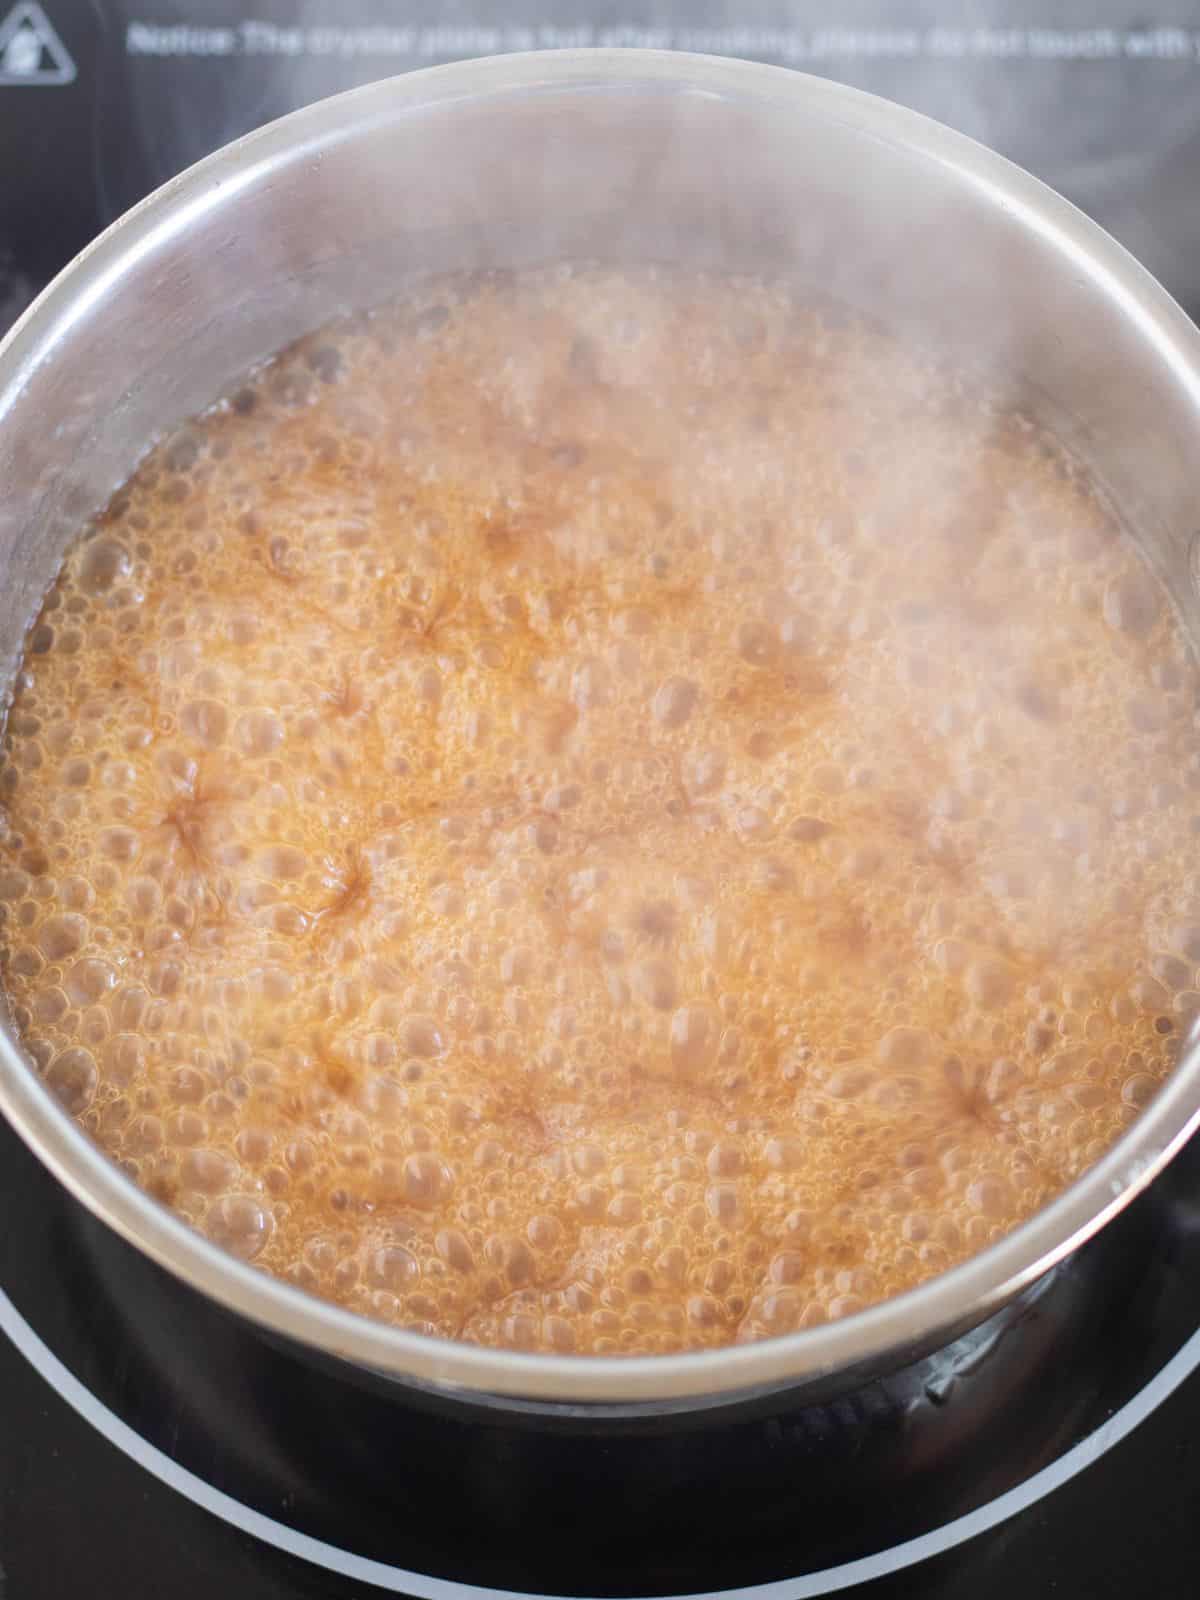 butter/sweetener mixture boiling in a saucepan.